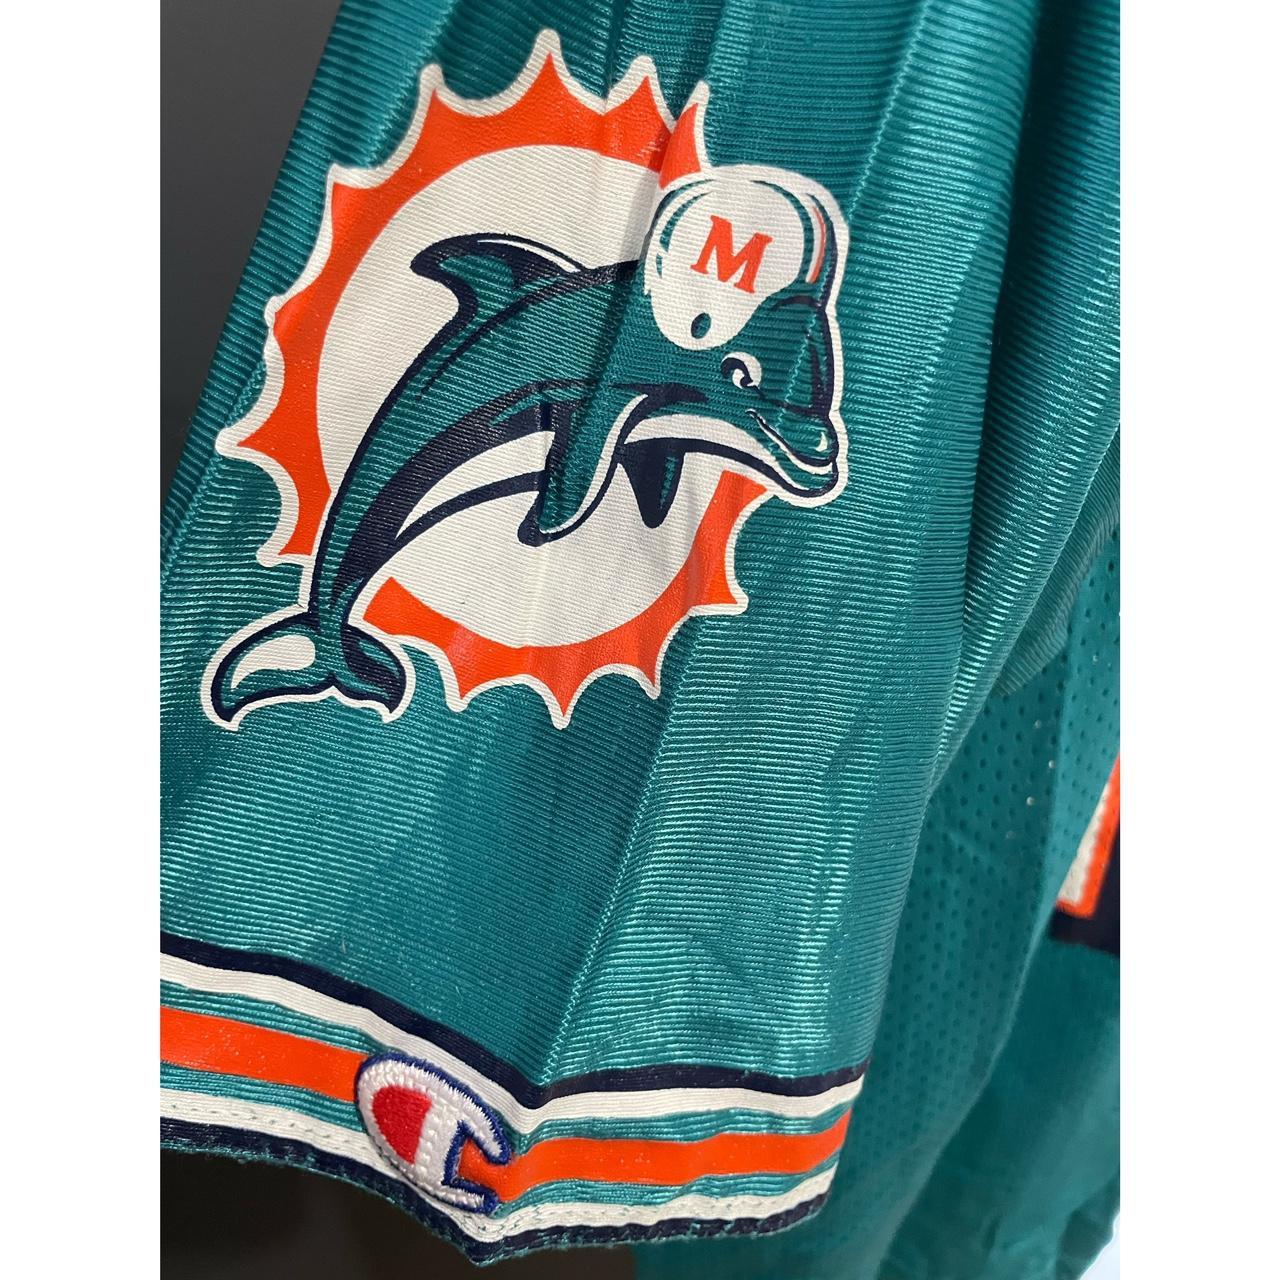 Vintage Miami Dolphins Champion Jersey Colour:... - Depop